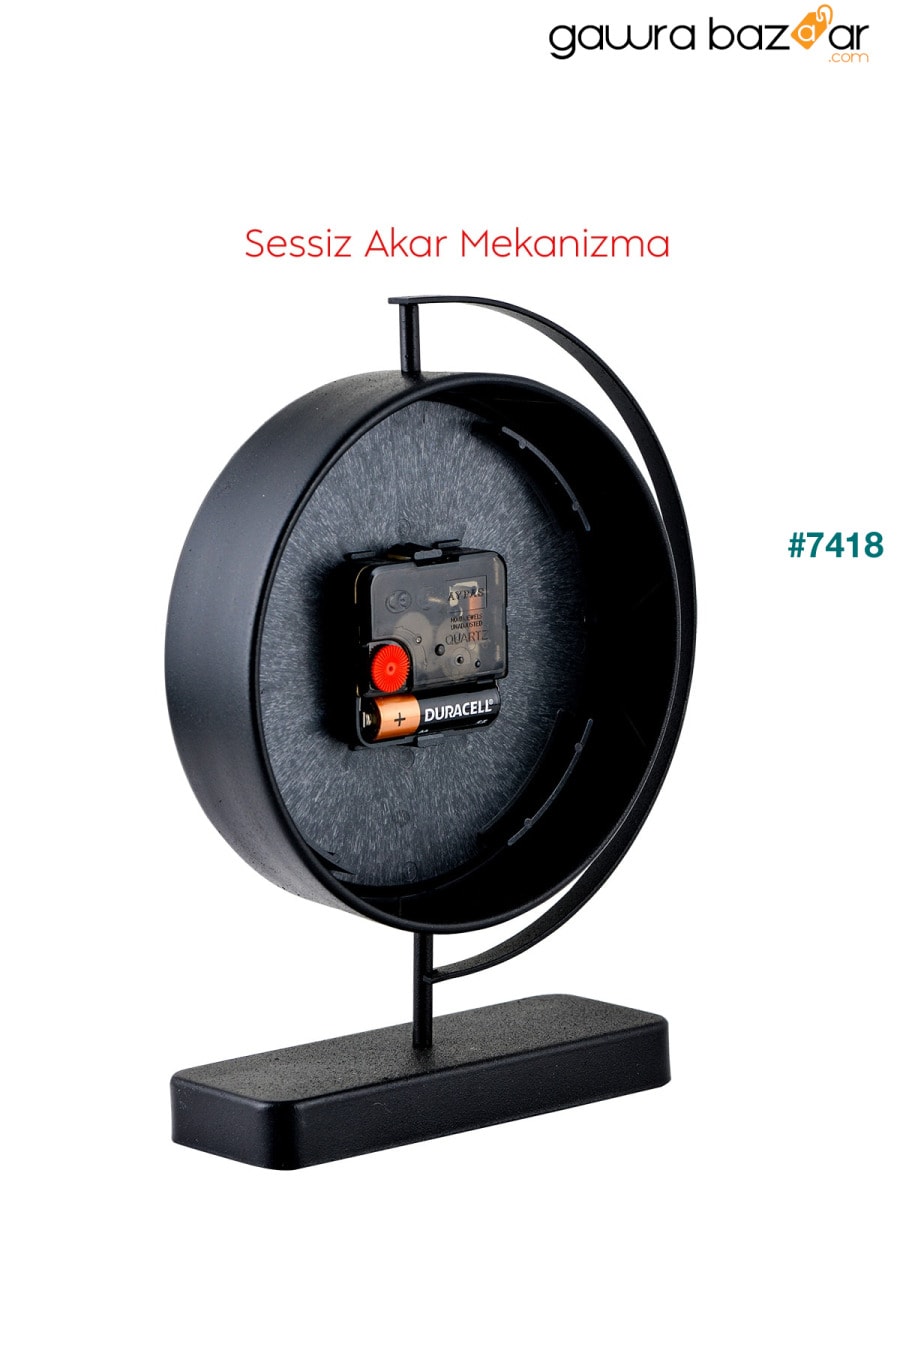 Muyika Maniera ساعة مكتب معدنية مزخرفة آلية صامتة أسود mms Muyika Design 5